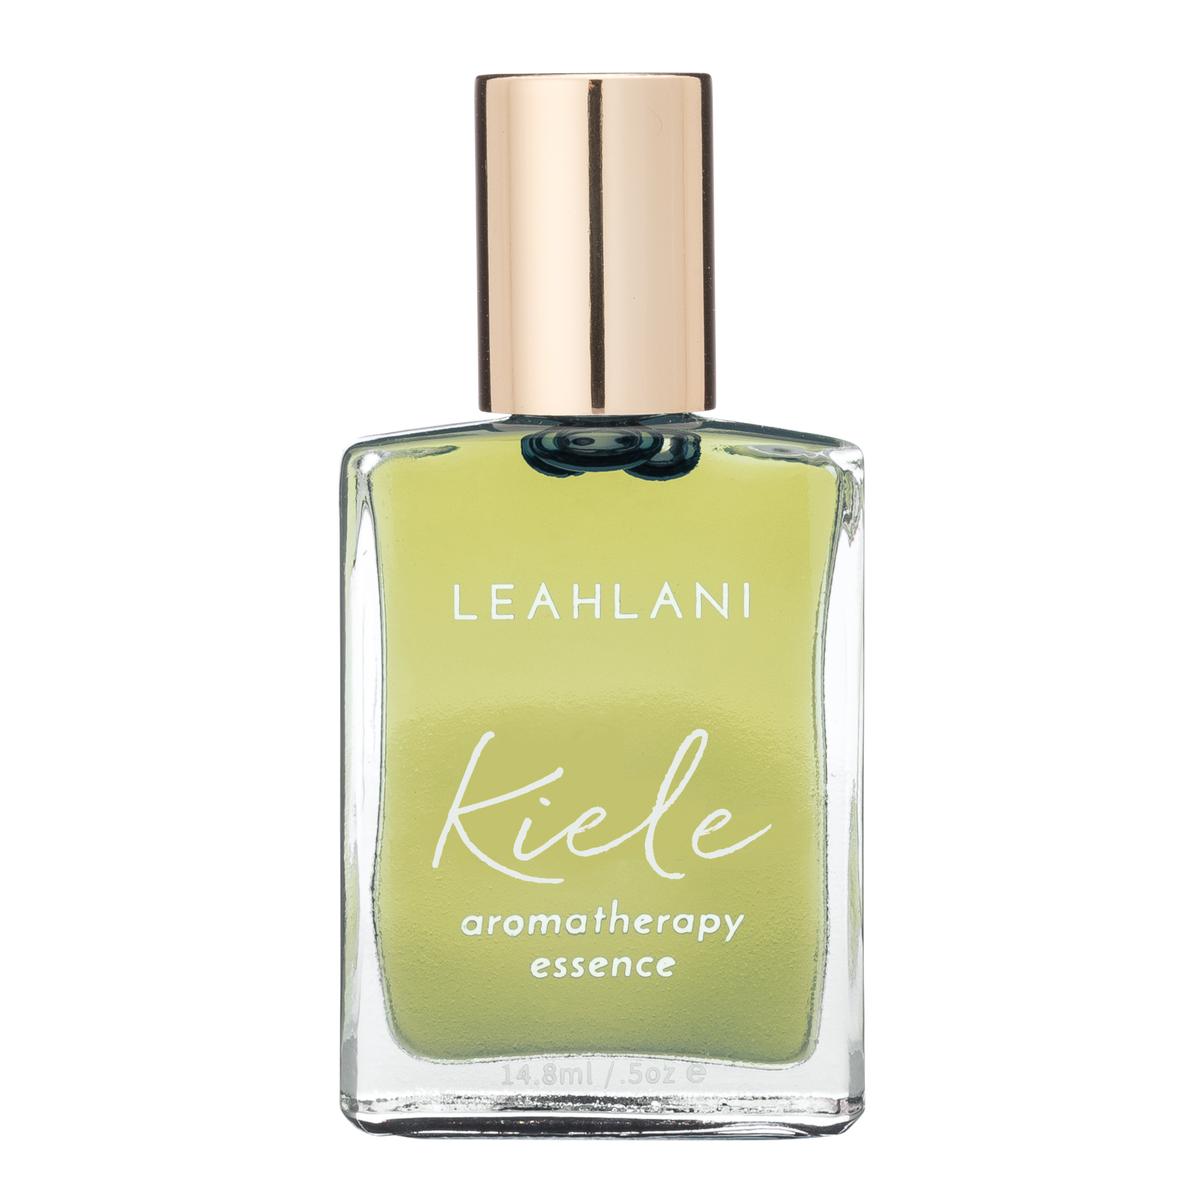 Leahlani Kiele Aromatherapy Essence at Socialite Beauty Canada